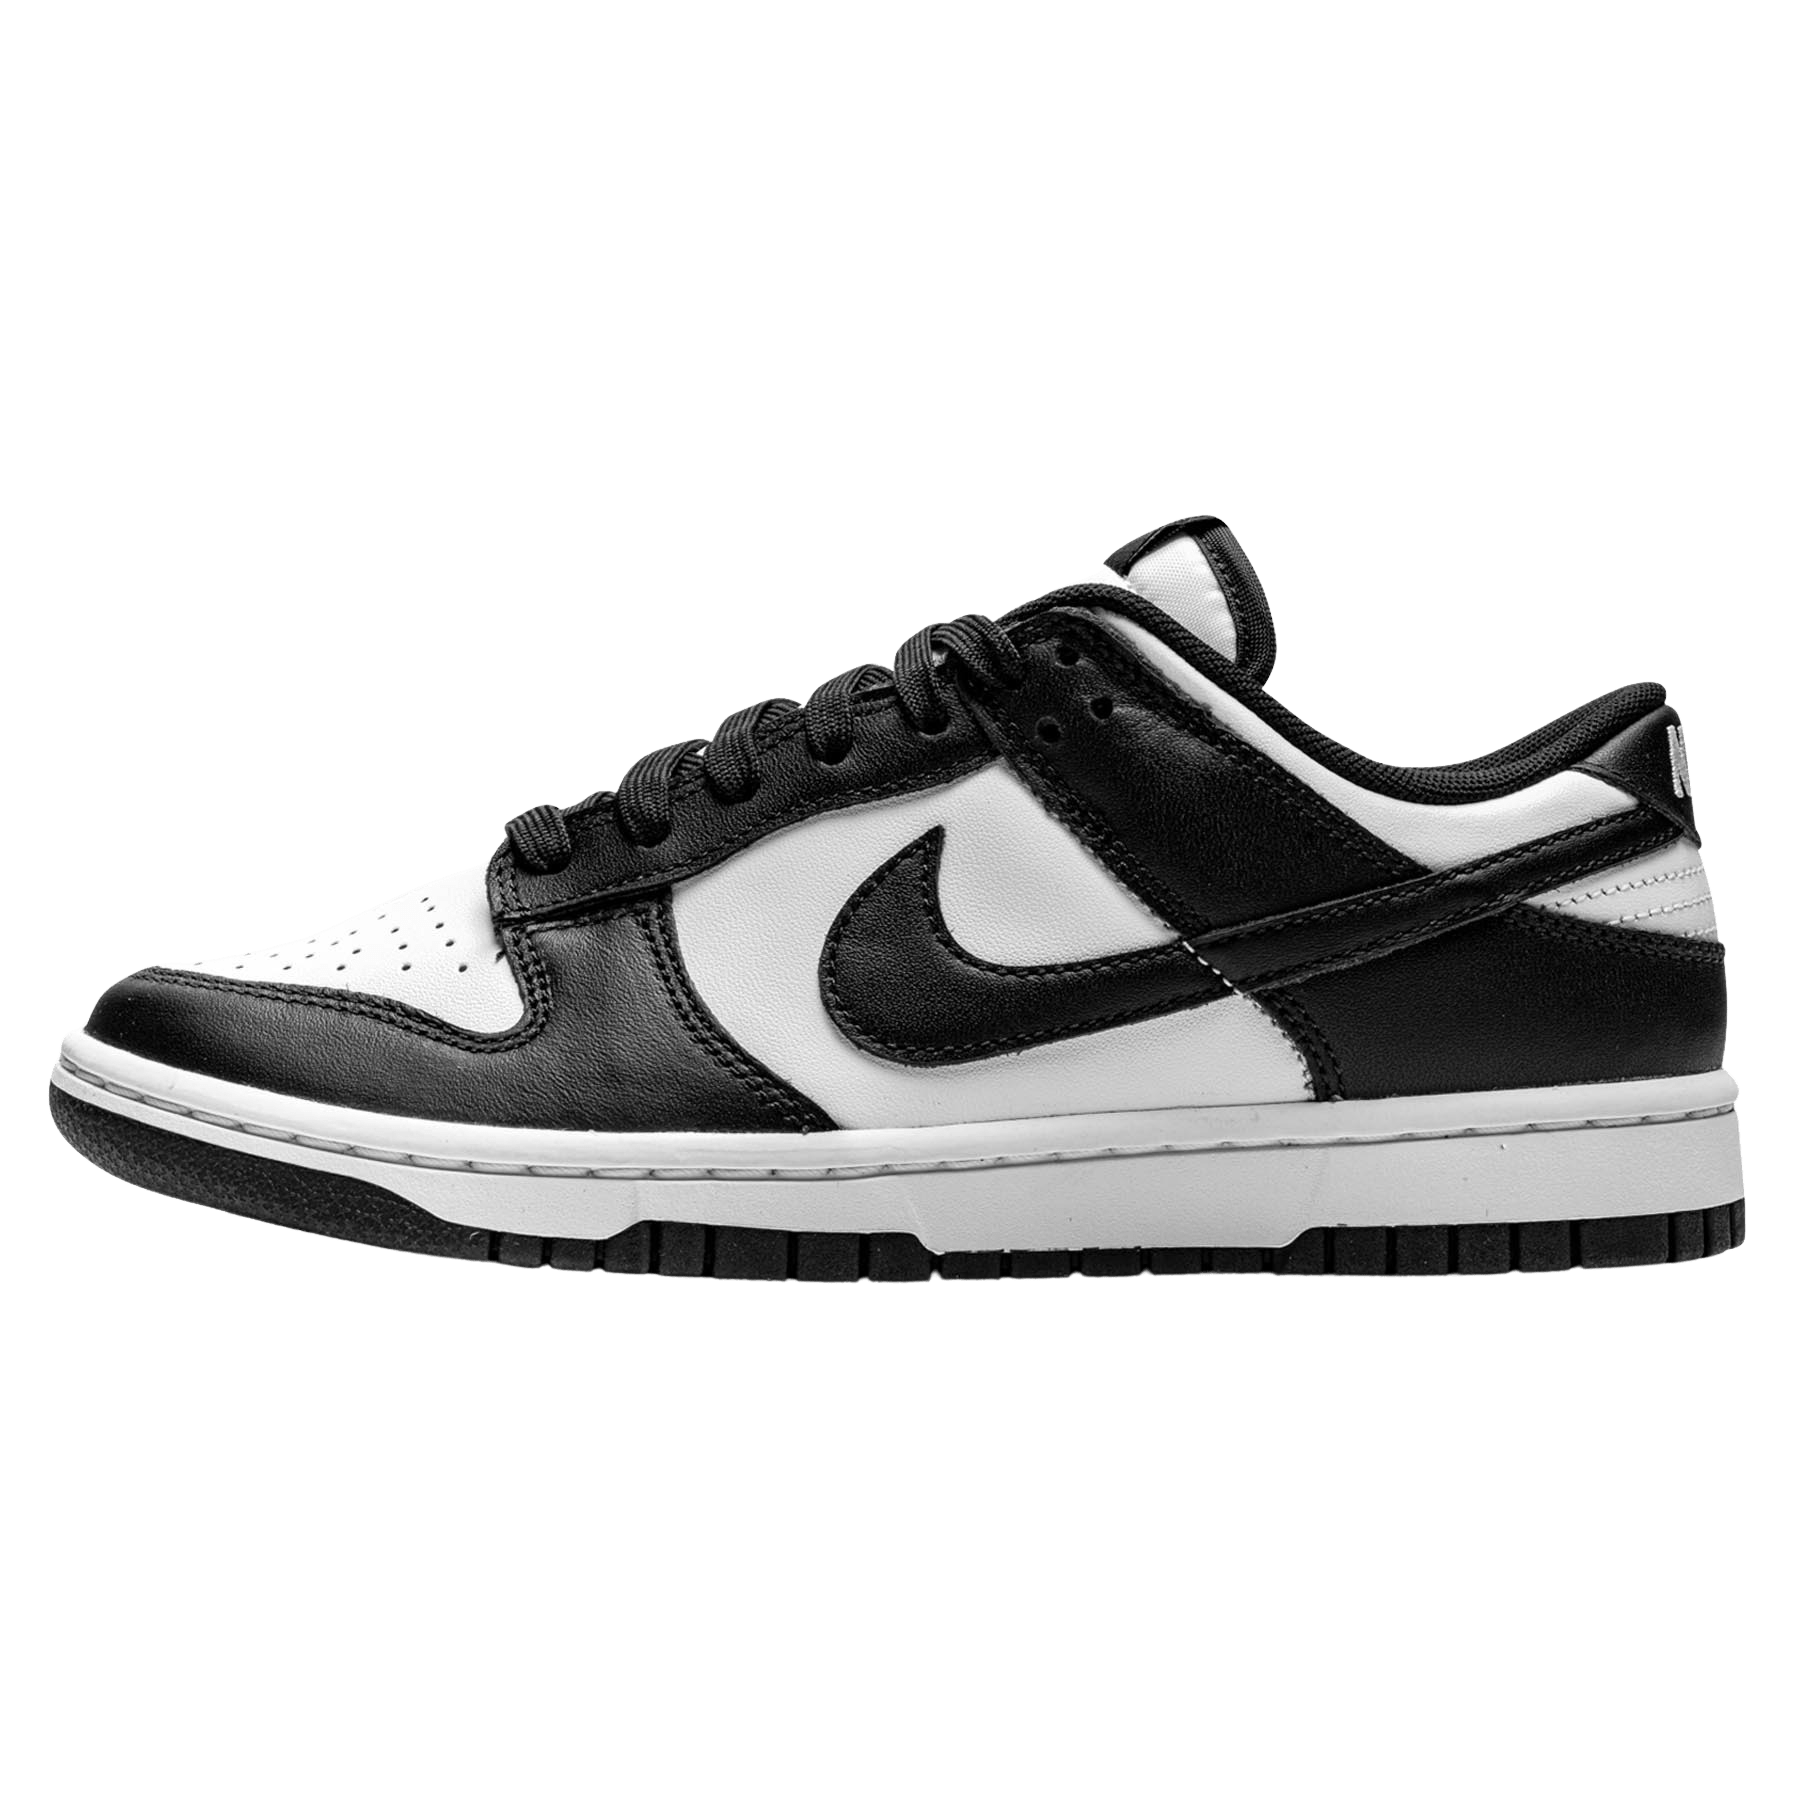 nike turbo shoes cortez black and grey black gum color